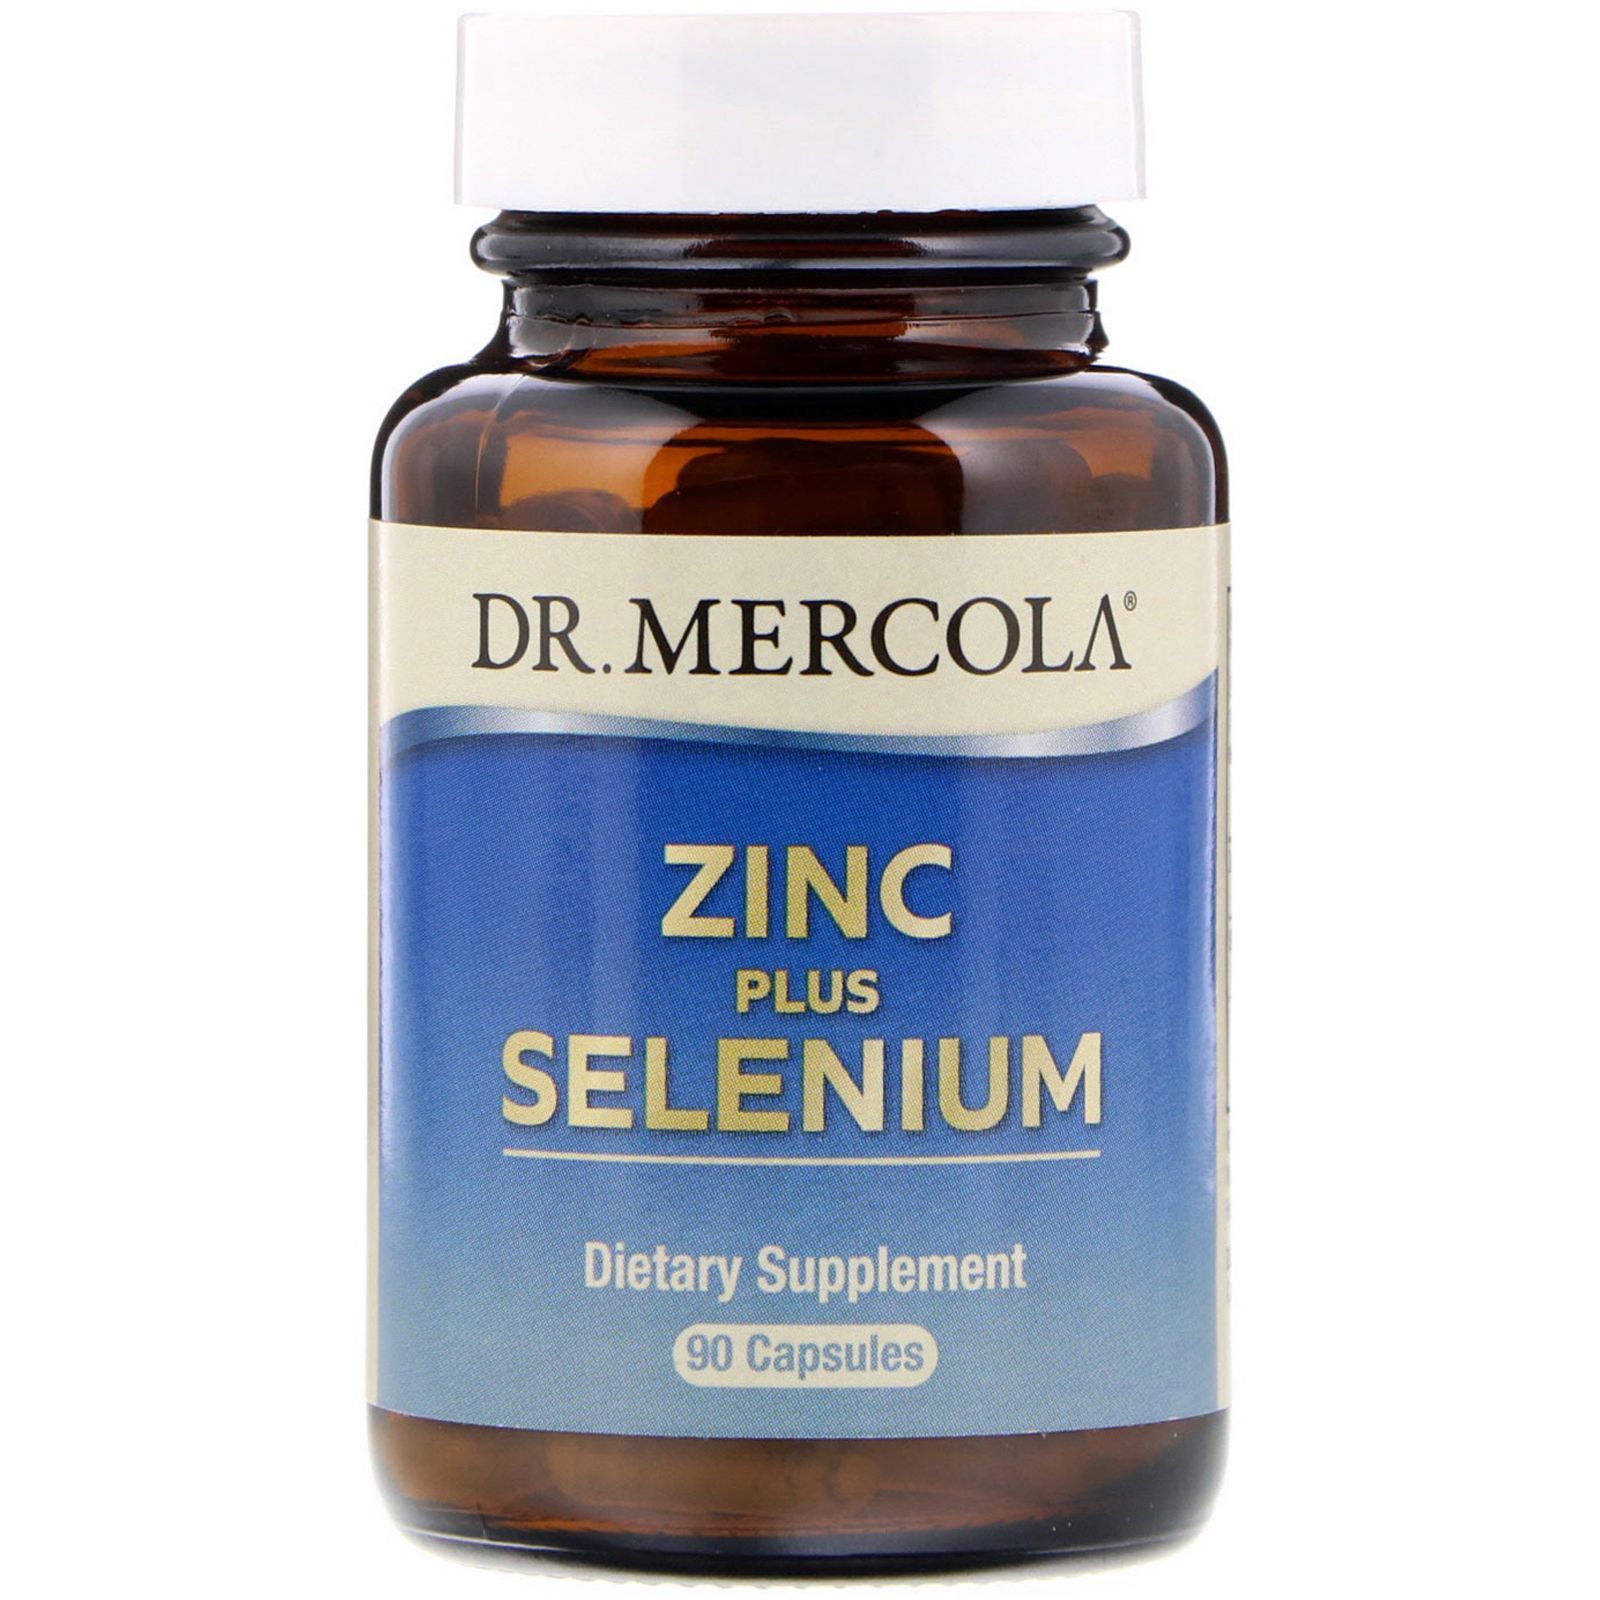 Селен цинк марганец. Zinc селениум витамины. Цинк Dr Mercola. Капсулы селениум плюс цинк. Цинк и селен от доктора Меркола.